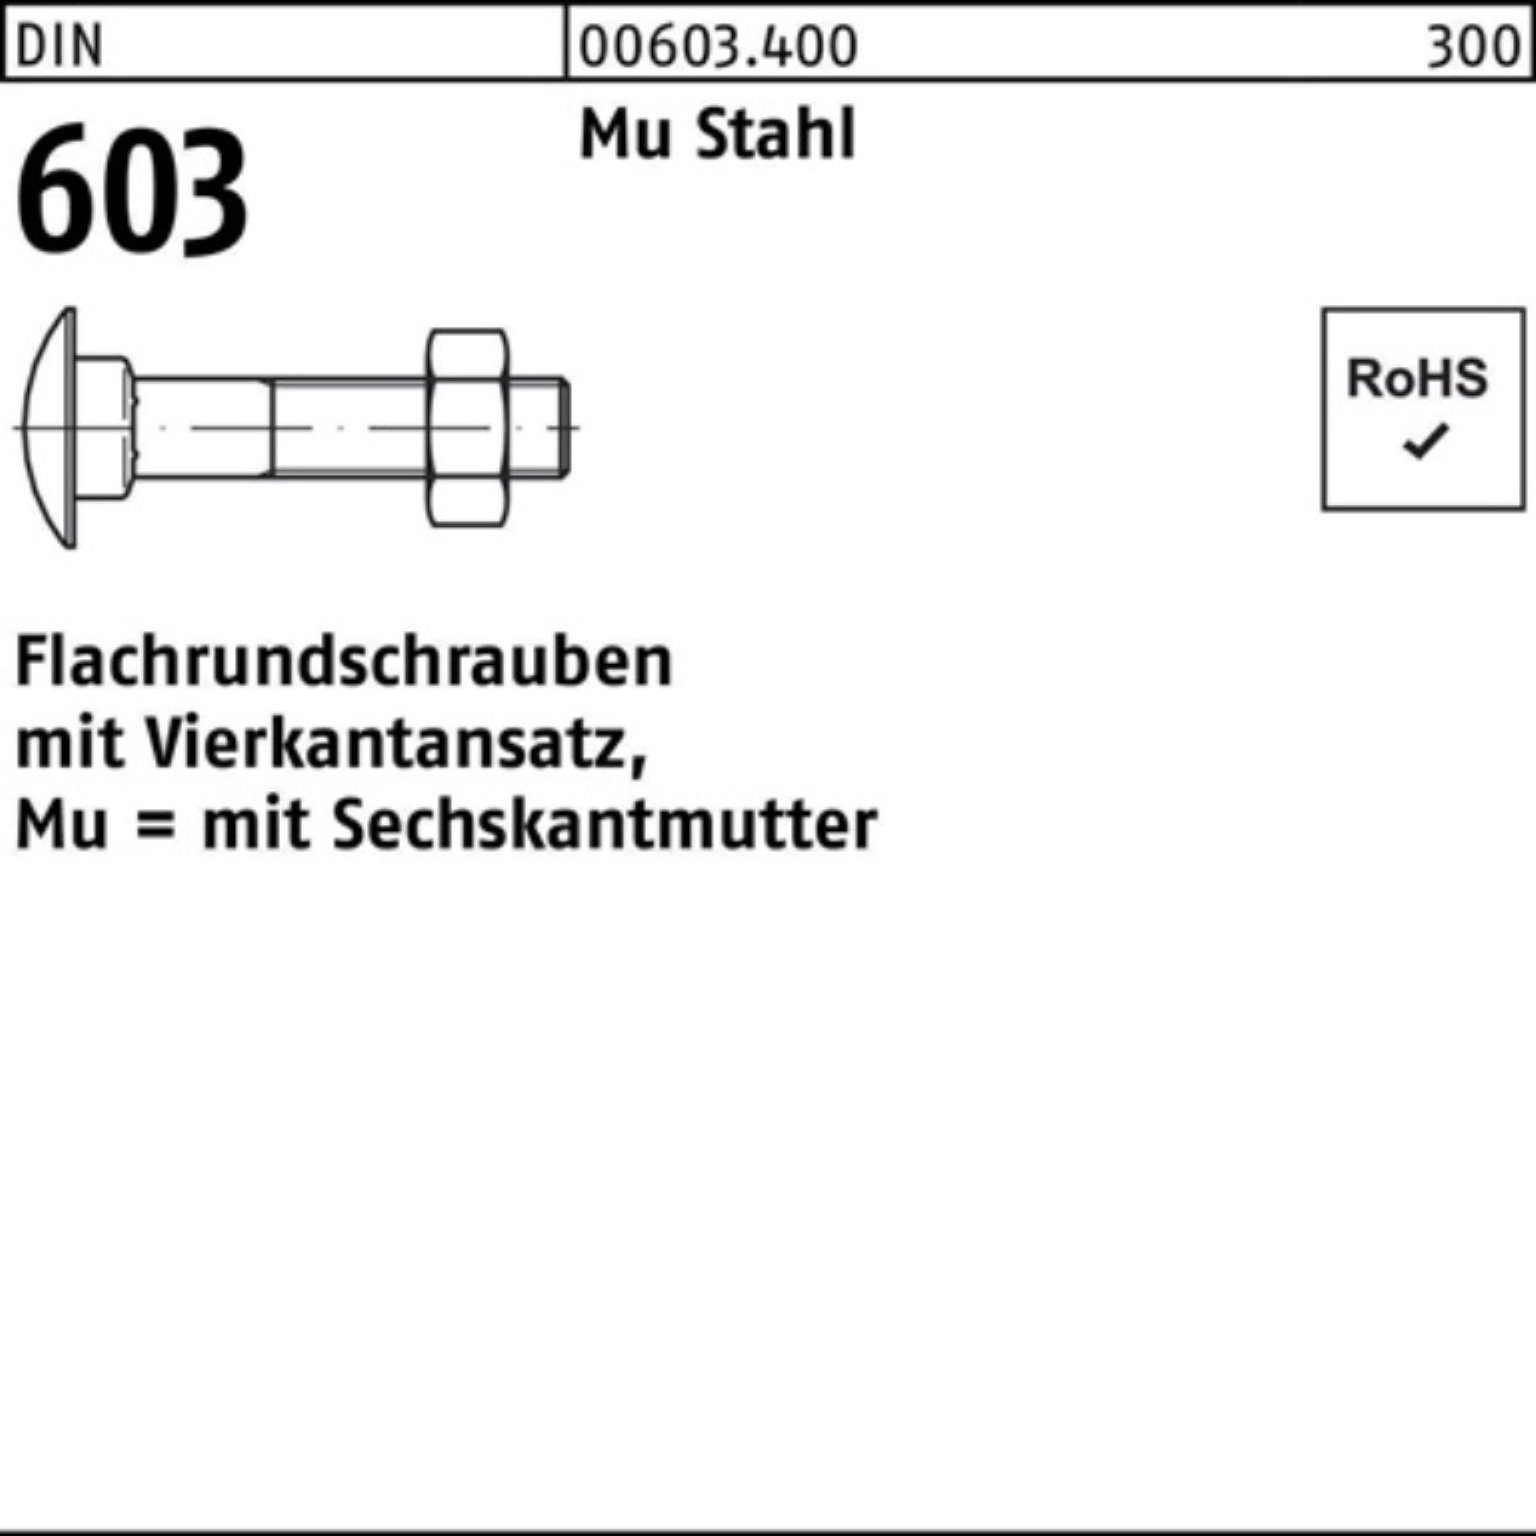 Reyher DIN 100er 603 Flachrundschraube Pack Vierkantansatz/6-ktmutter M8x180 Schraube